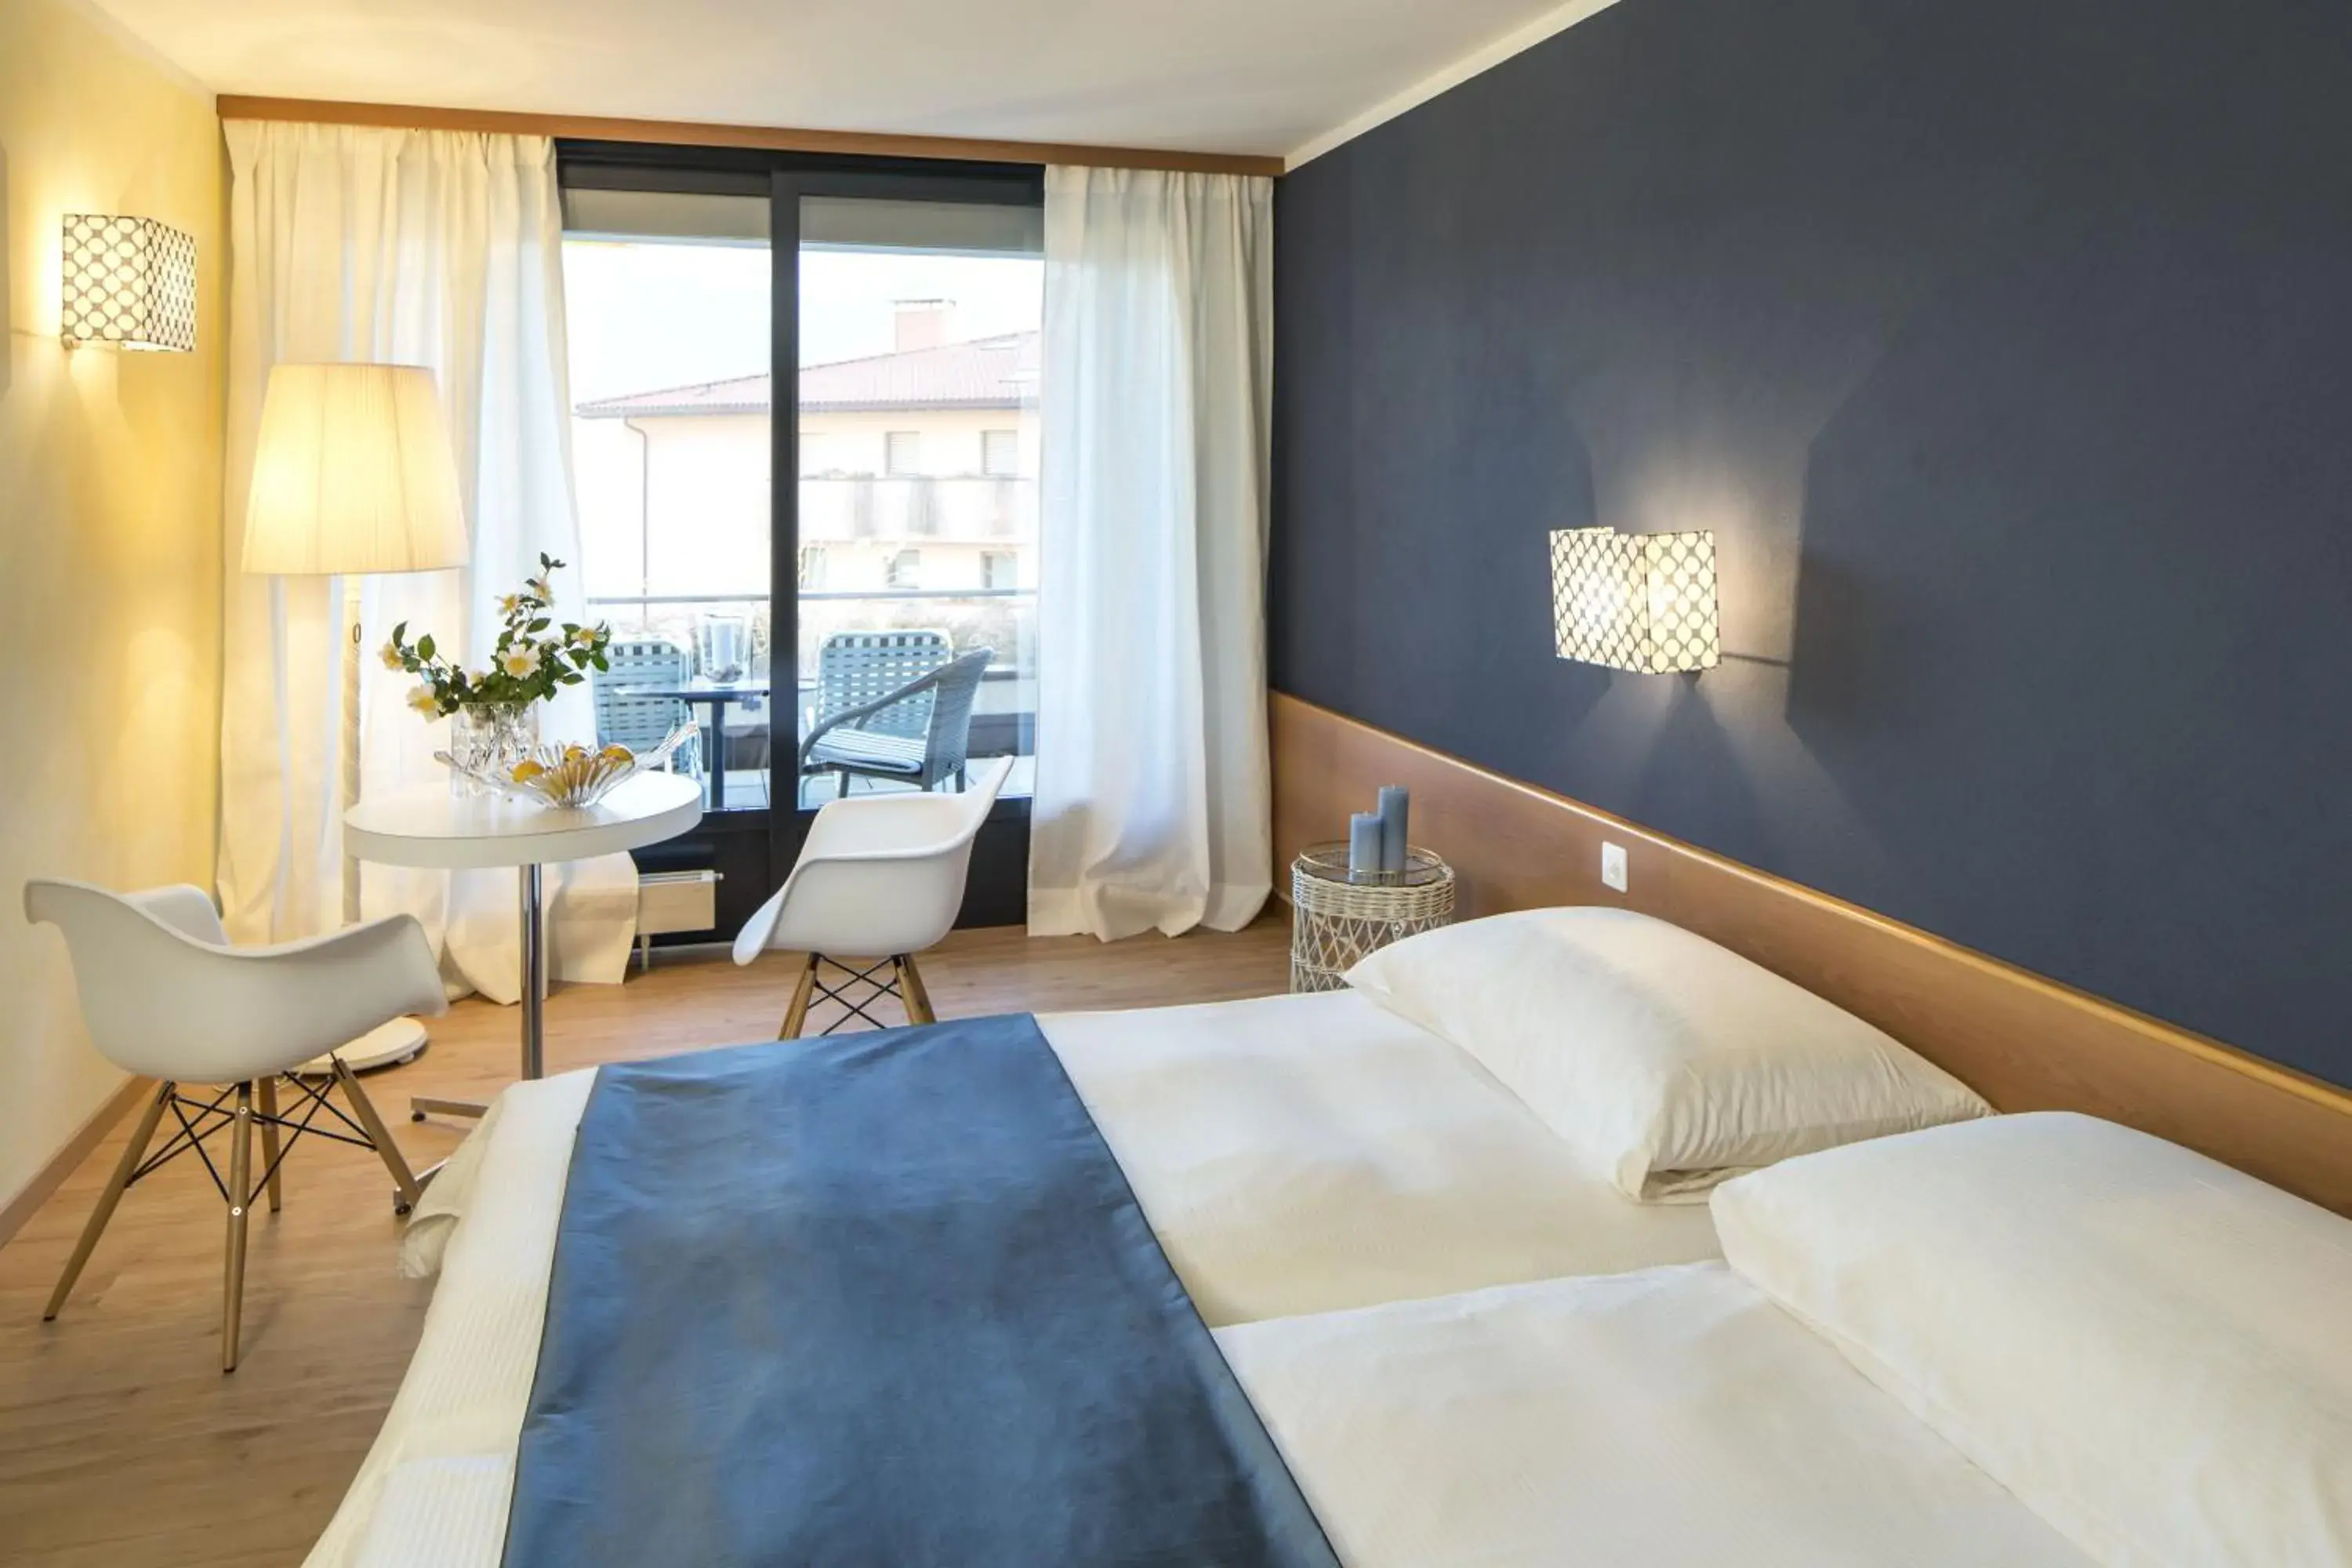 Bedroom in La Barca Blu